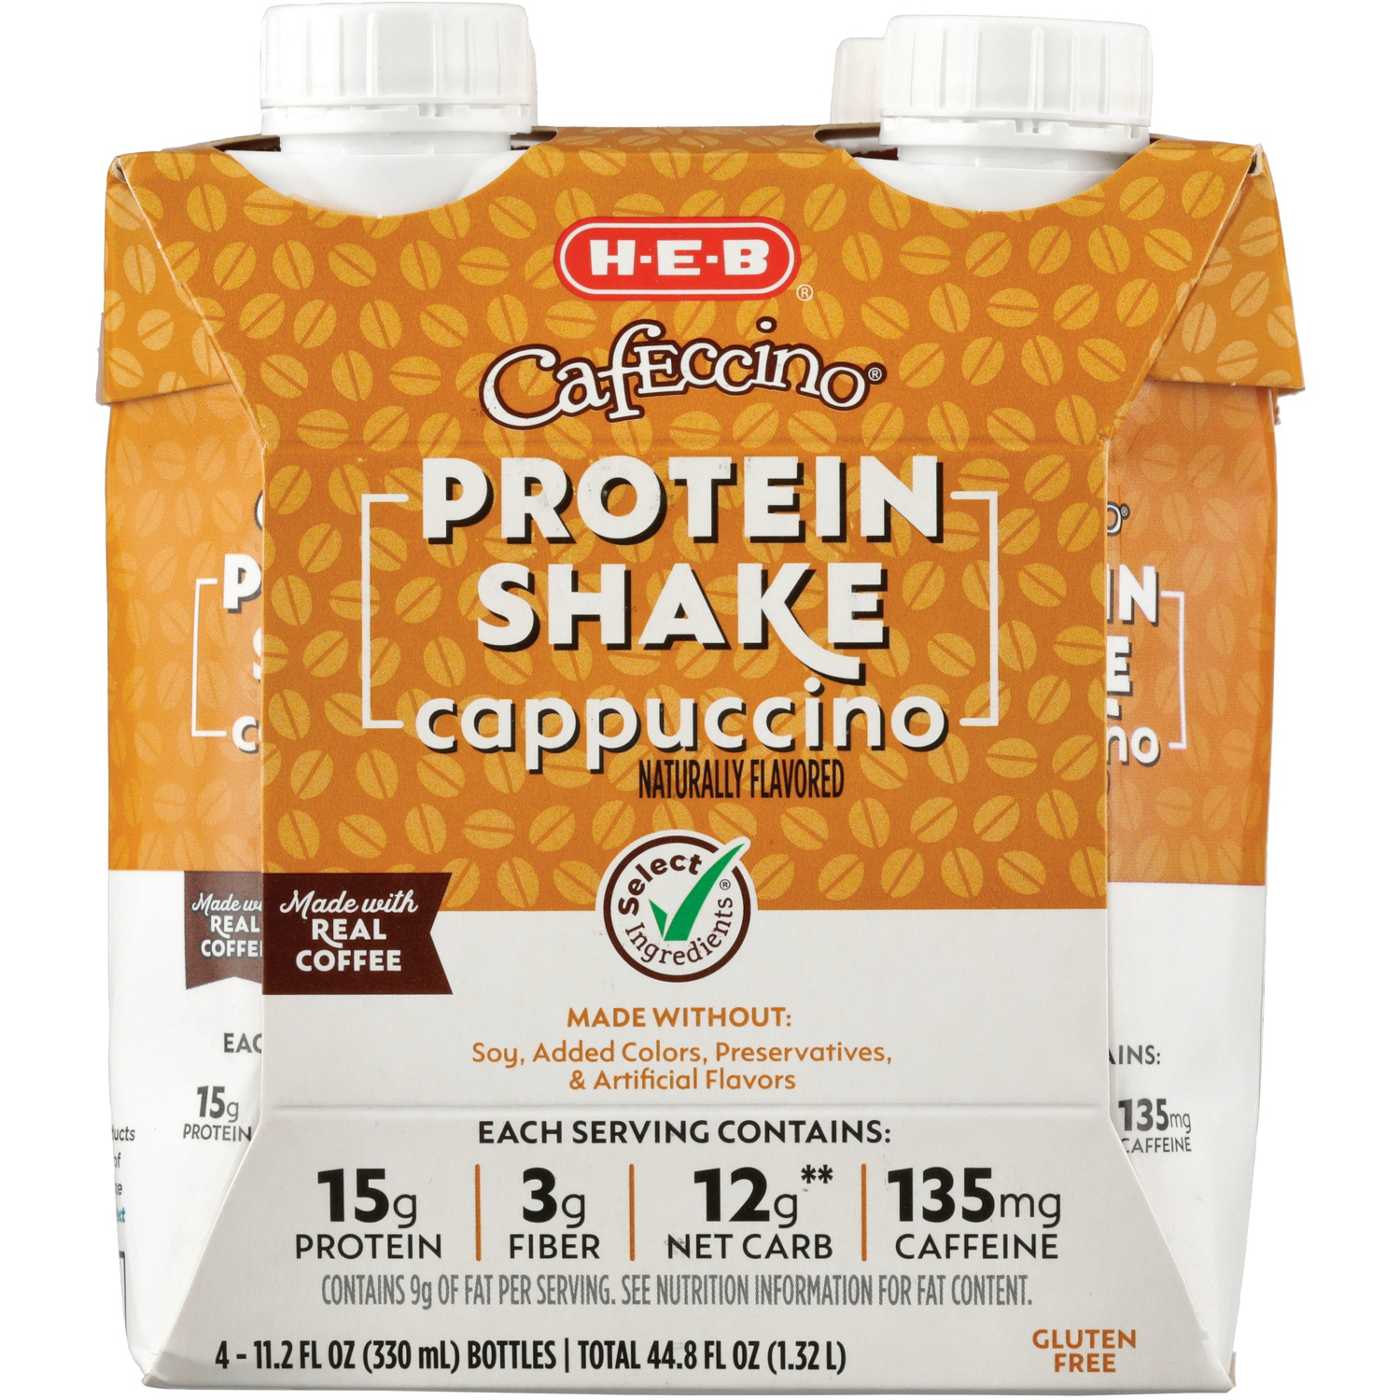 H-E-B Cafeccino 15g Protein Shake - Cappuccino; image 1 of 2